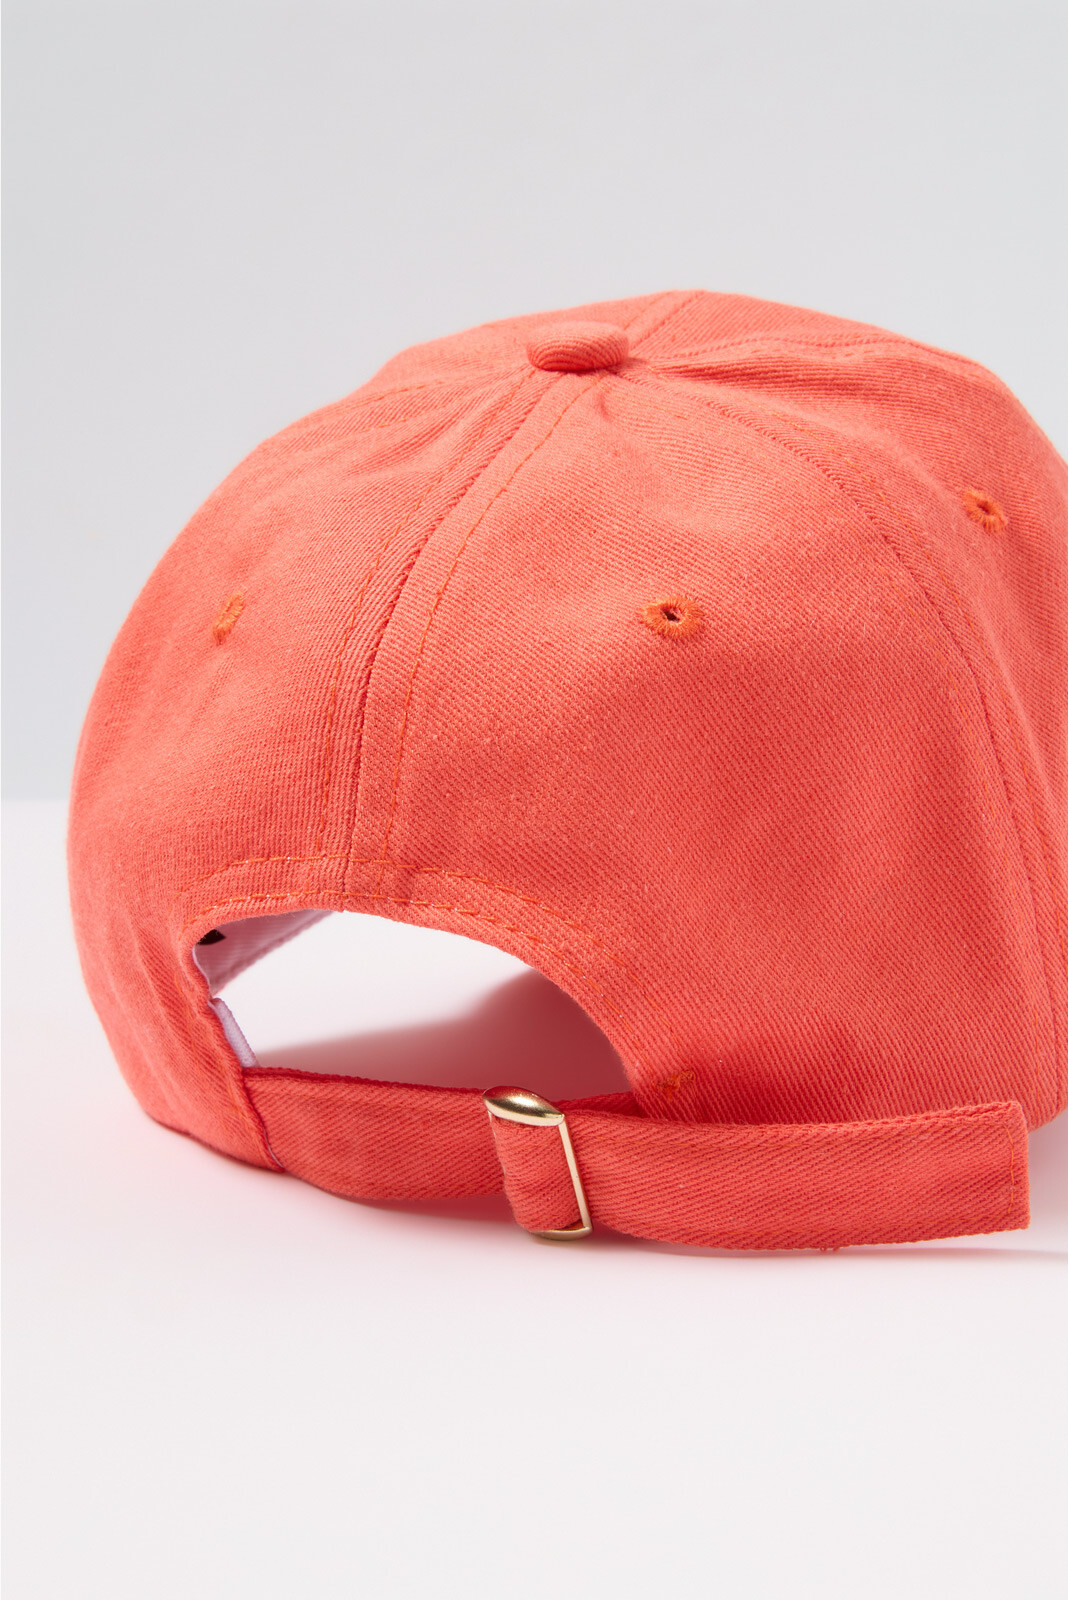 Poppy Red Baseball Hat